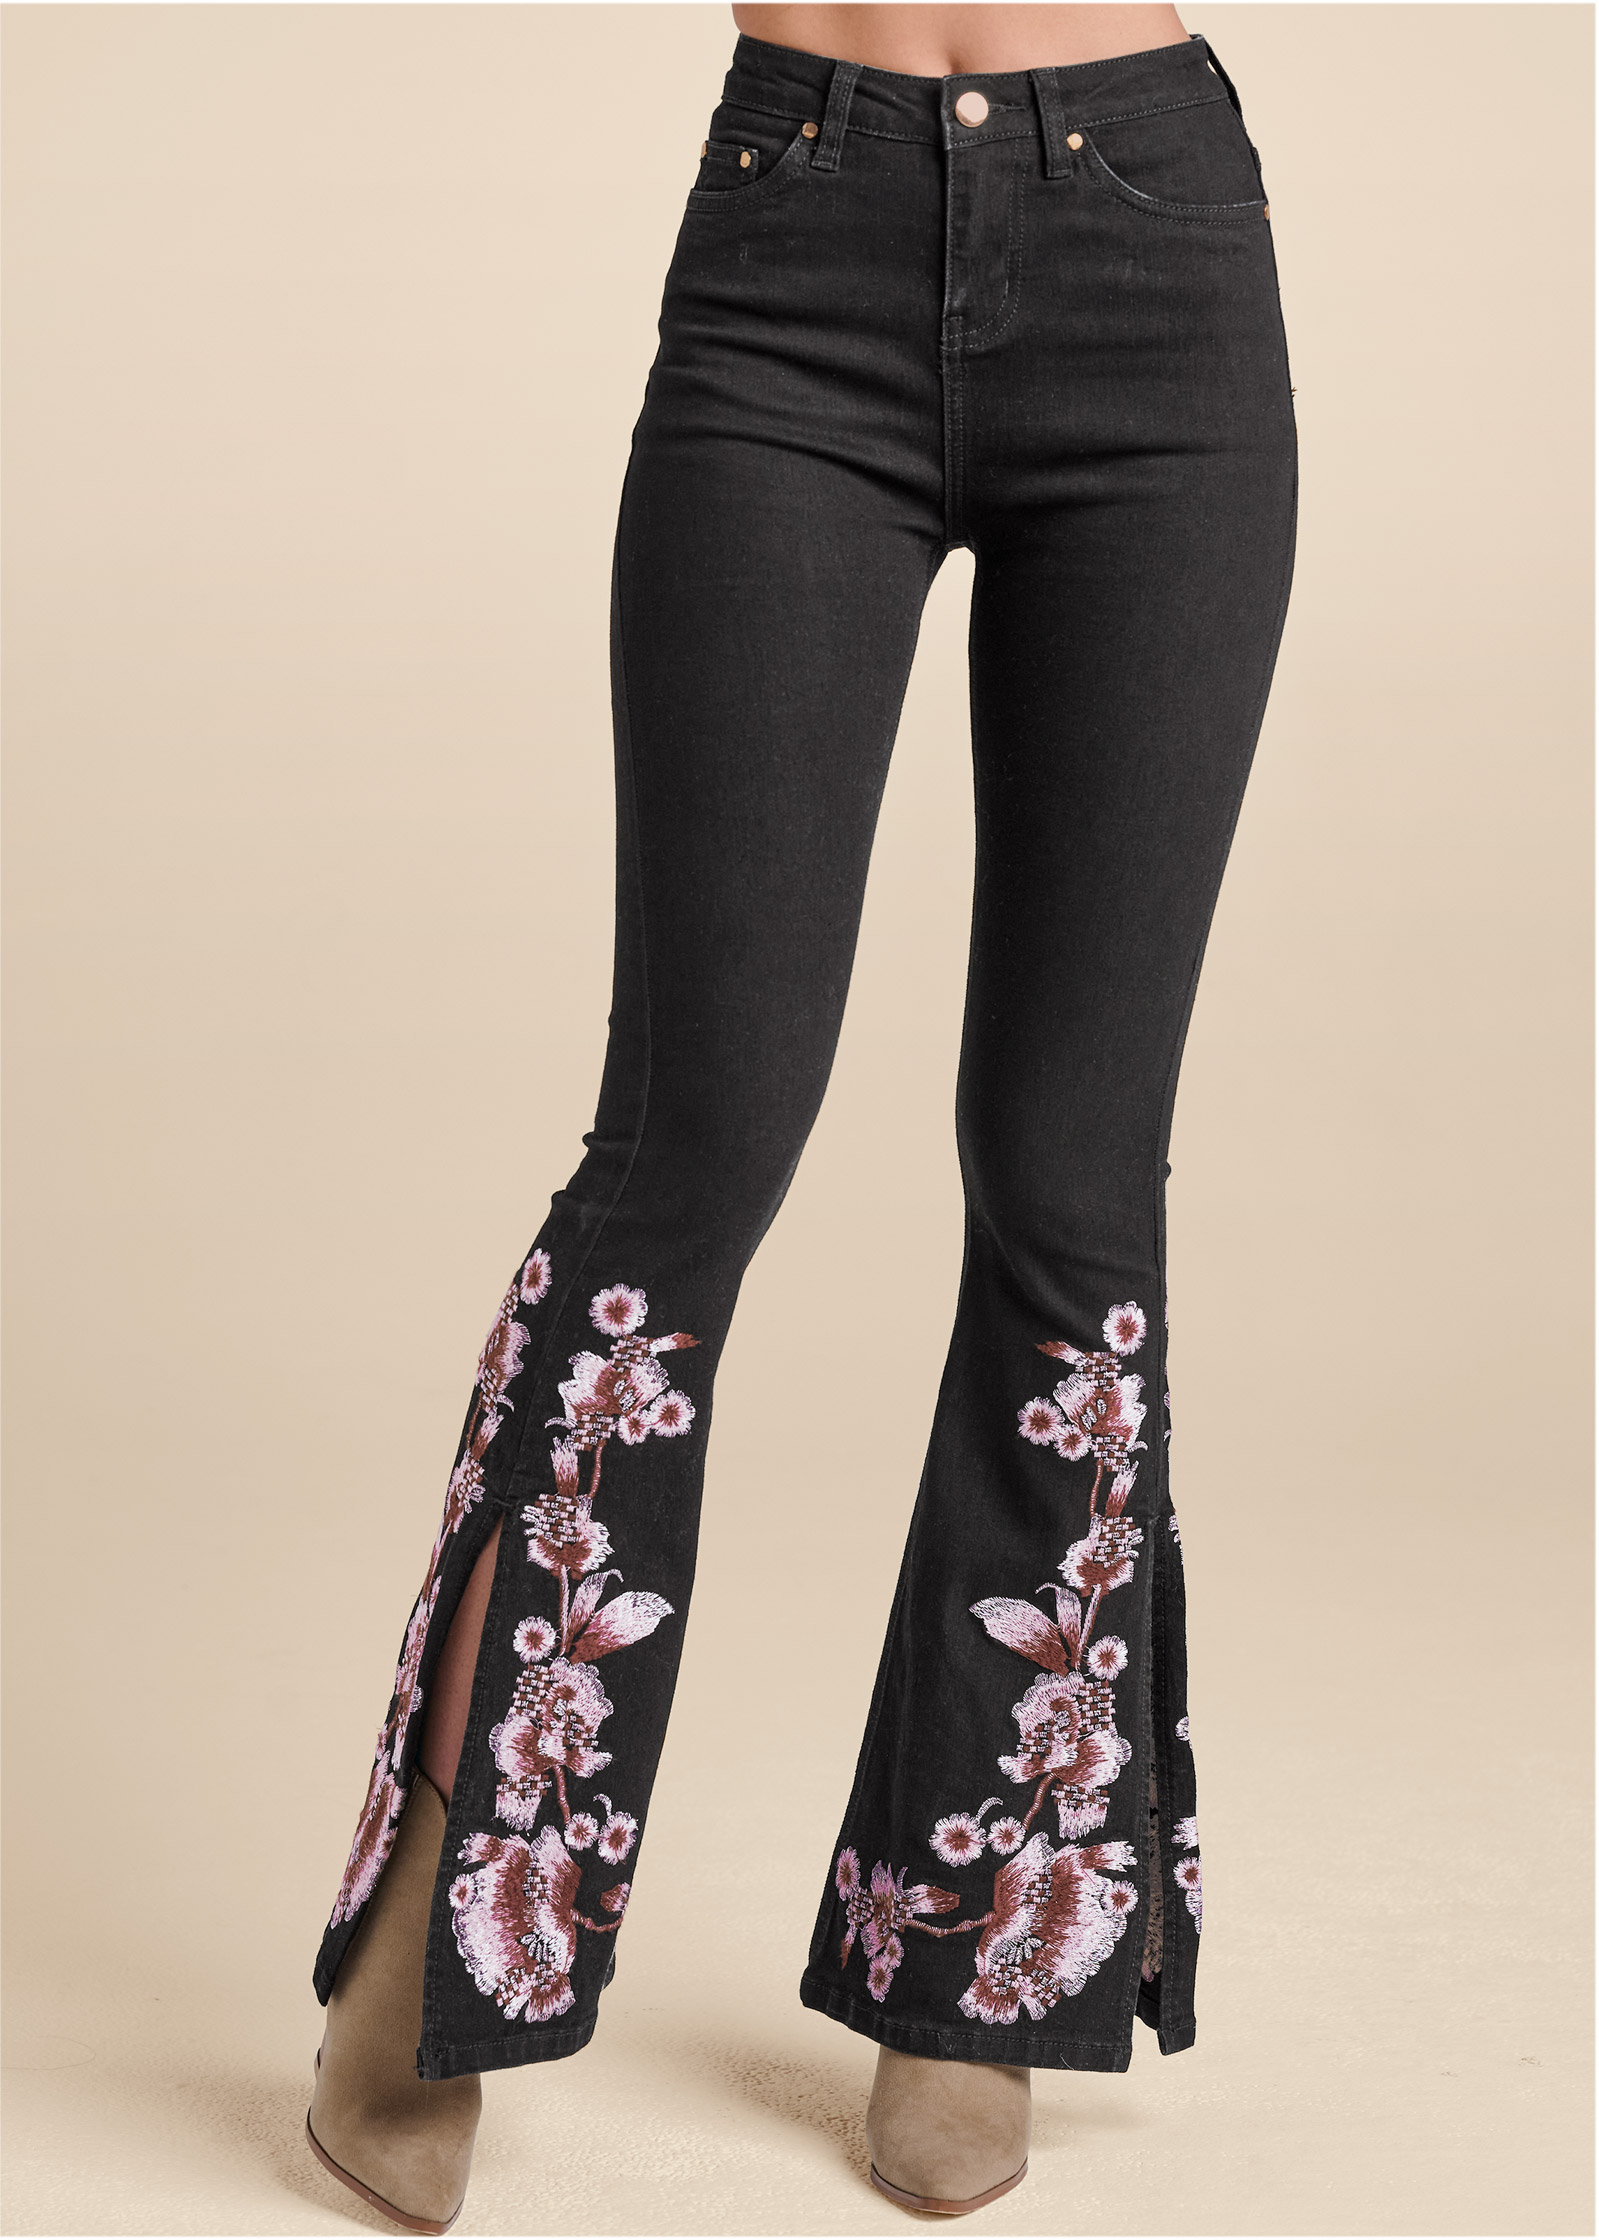 Slit Flare Floral Jeans in Black Denim - Denim | VENUS